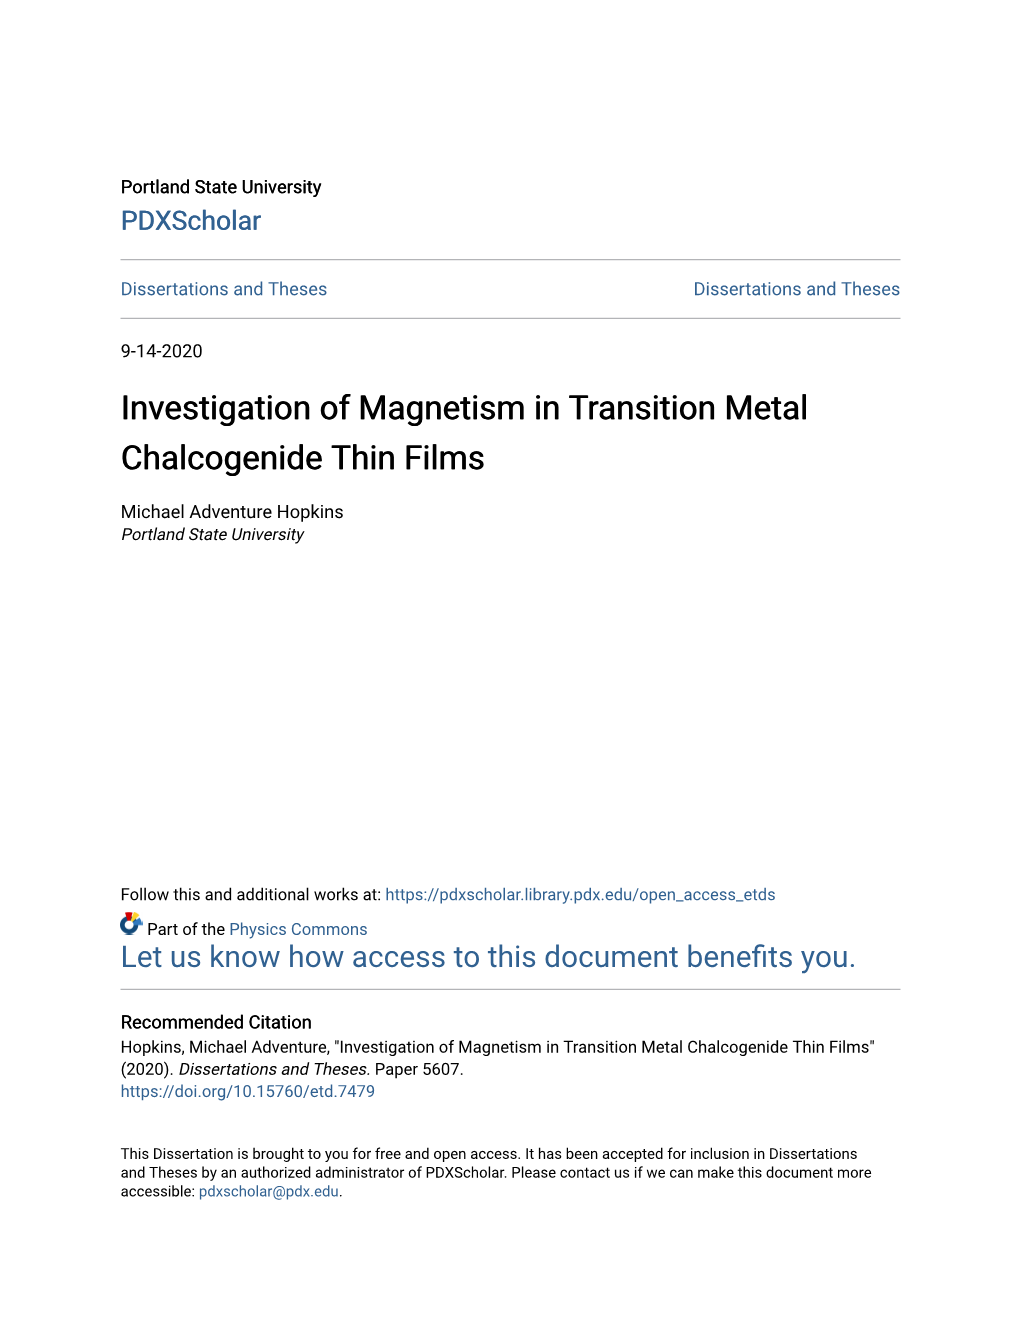 Investigation of Magnetism in Transition Metal Chalcogenide Thin Films